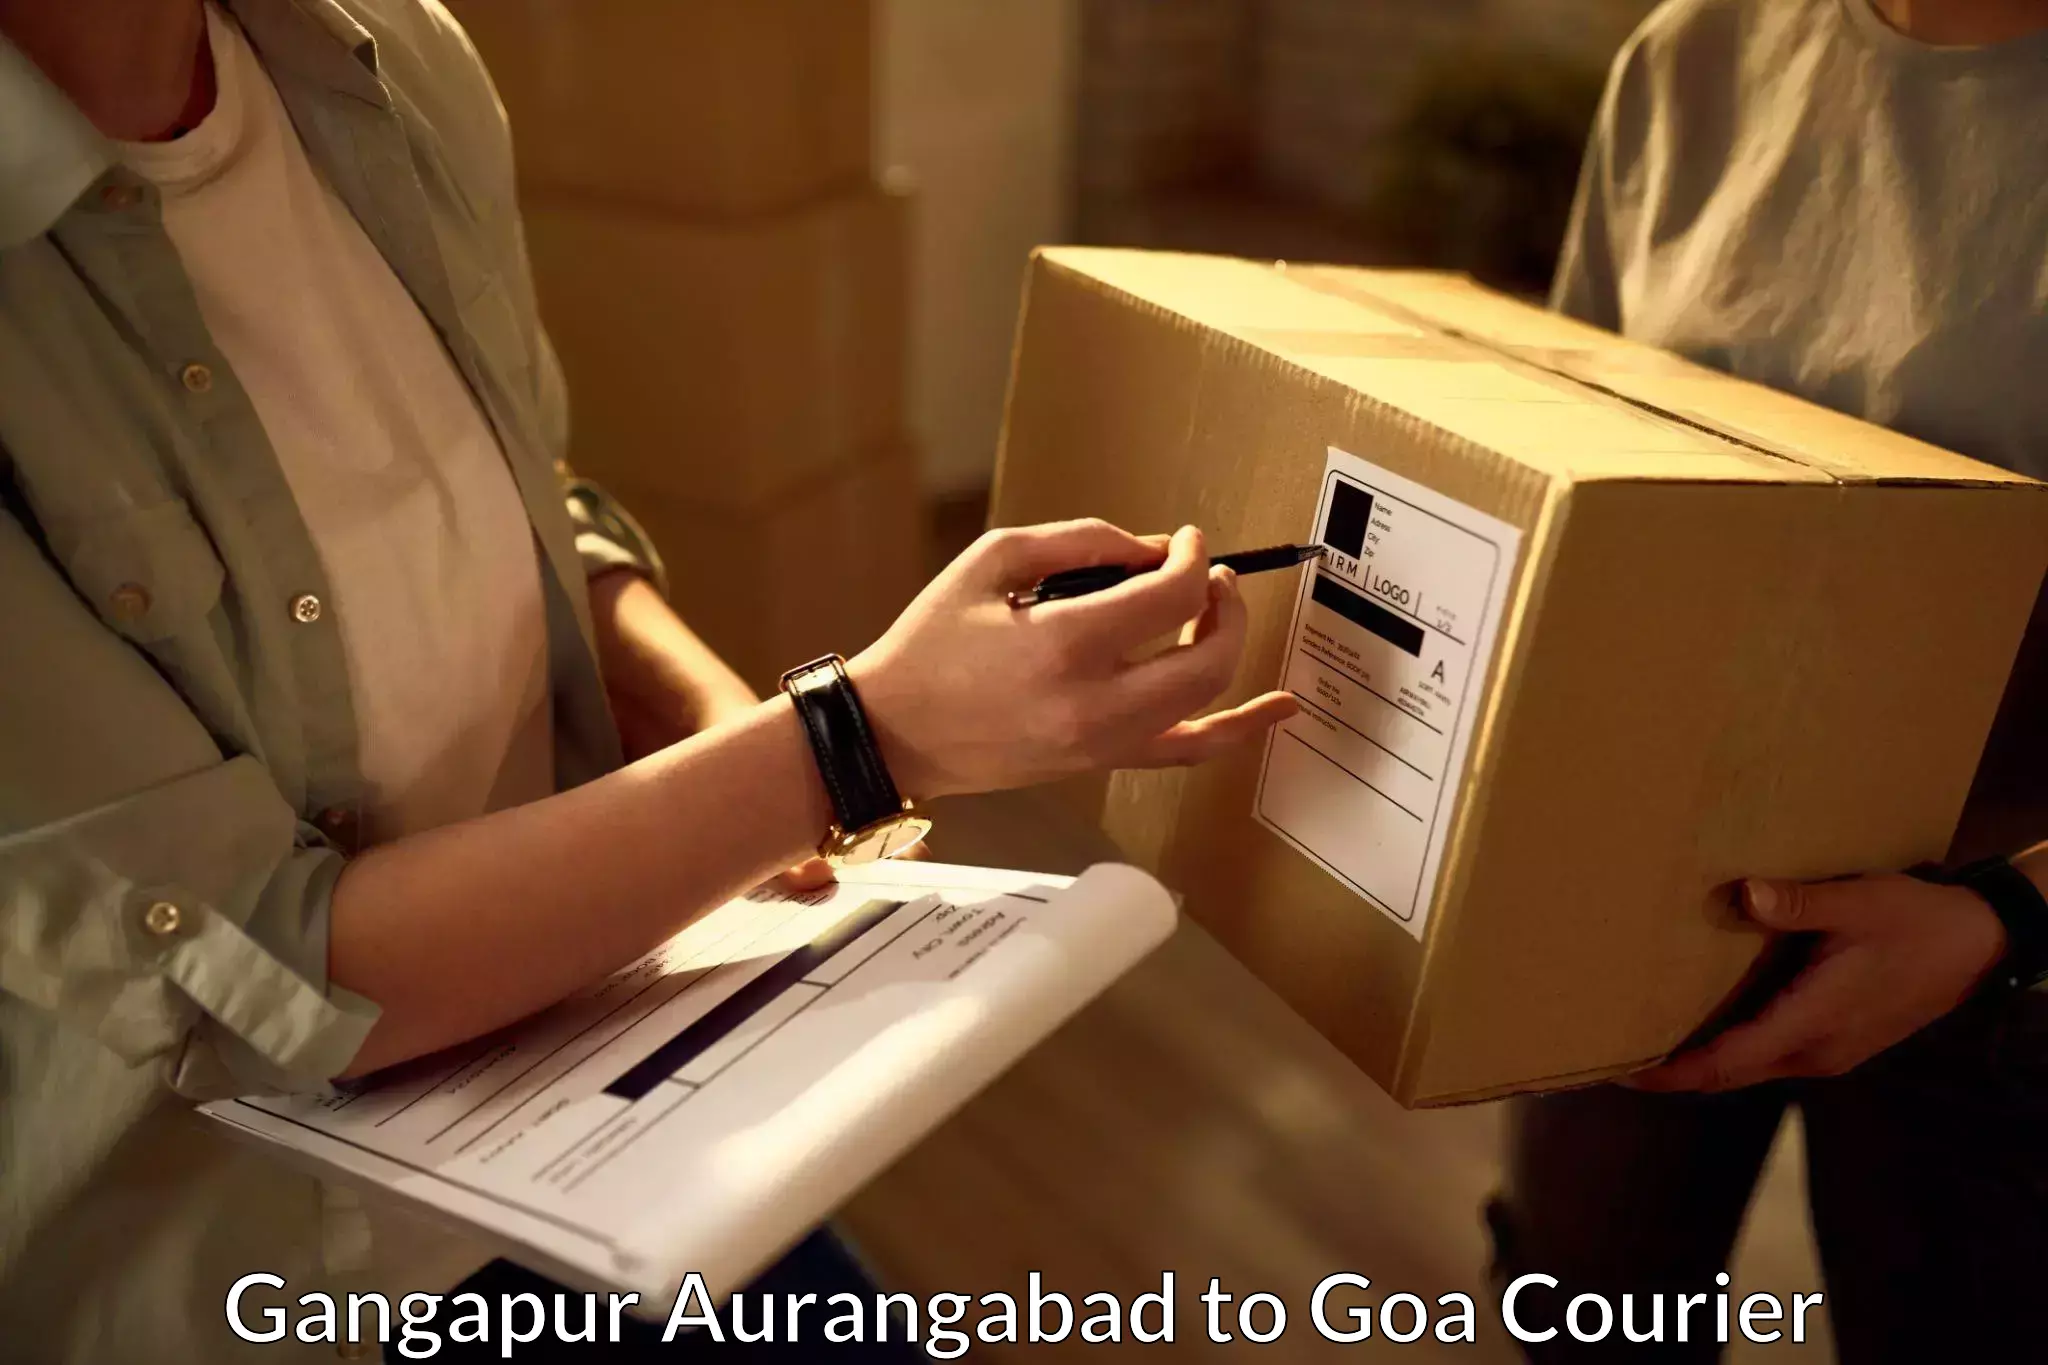 Cargo delivery service Gangapur Aurangabad to South Goa